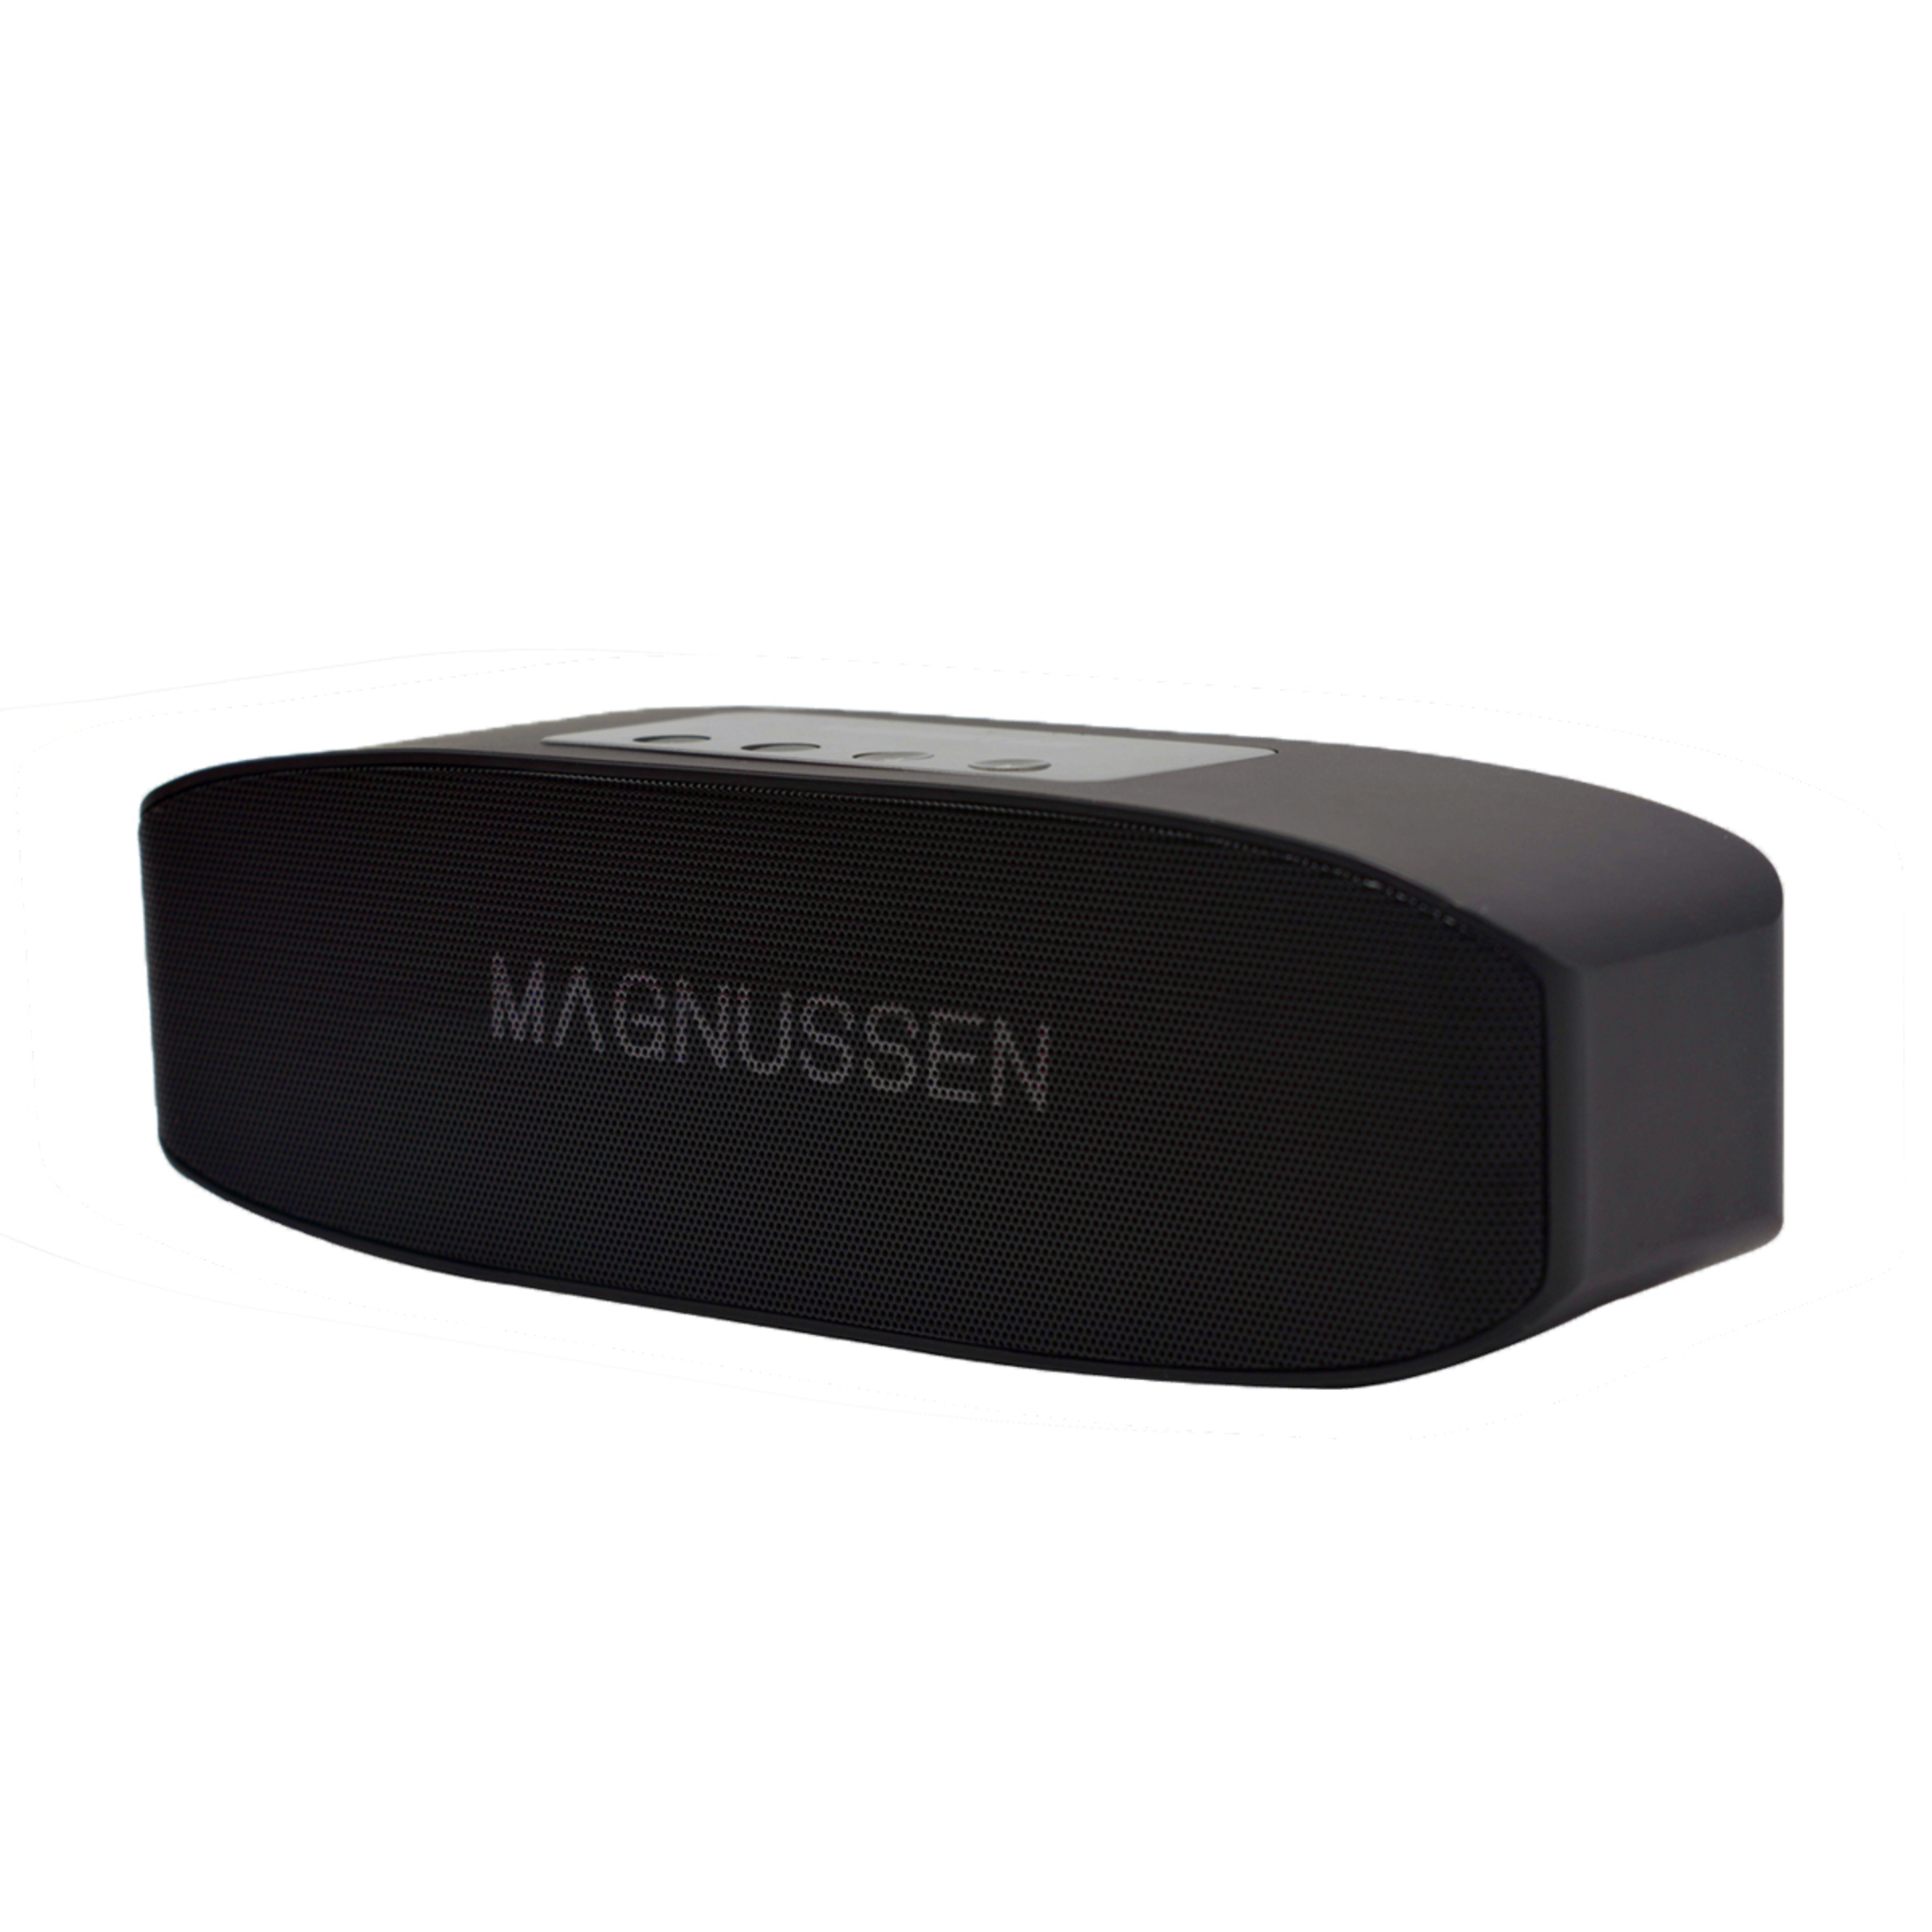 Altifalante Magnussen S3 Bluetooth